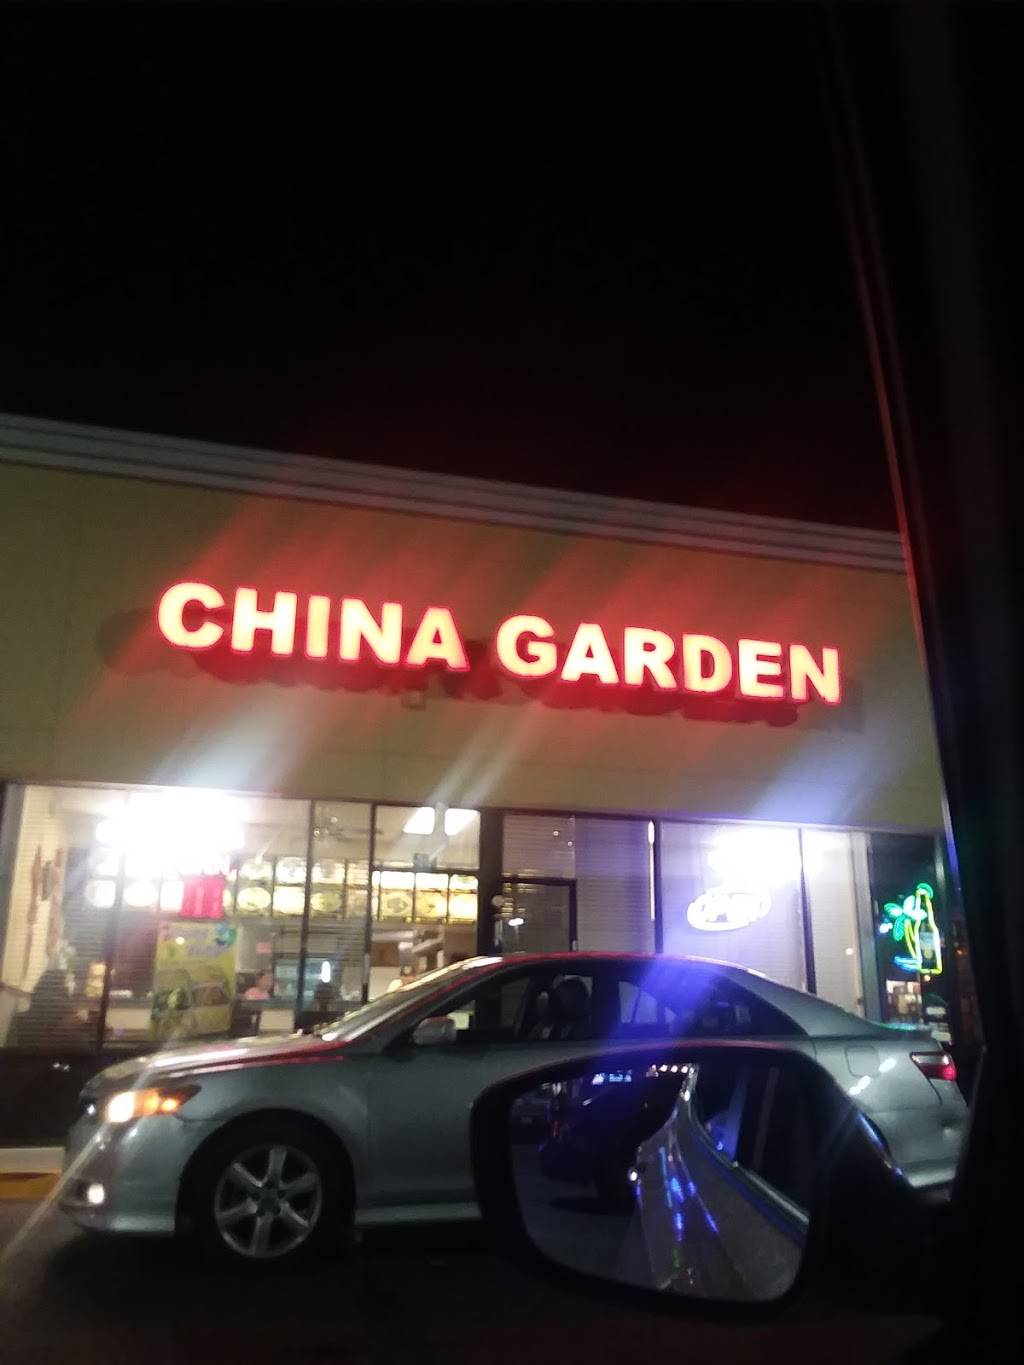 China Garden Restaurant 500 10019 N Dale Mabry Hwy Tampa Fl